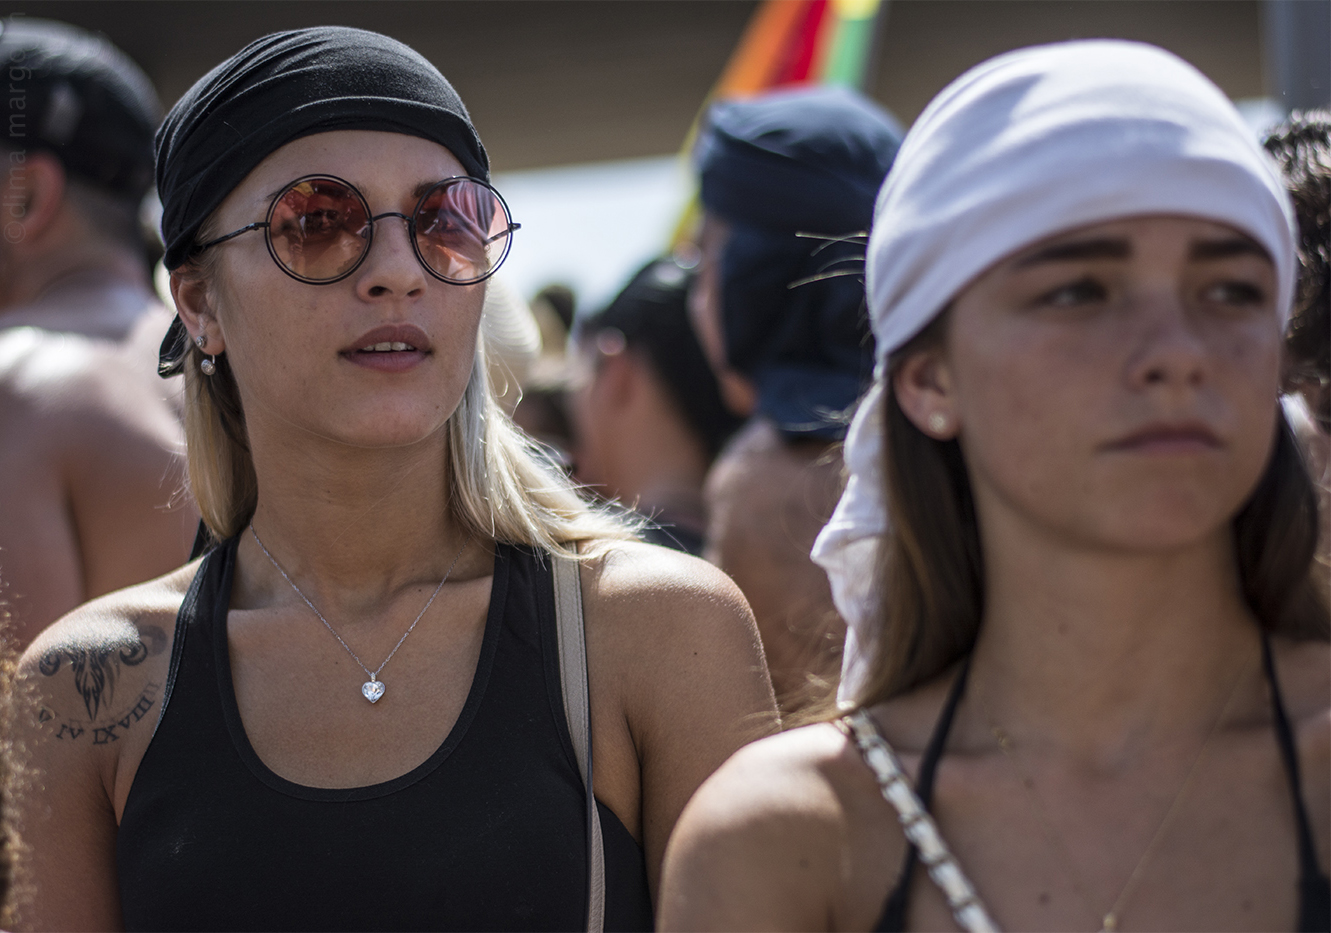 Tel Aviv pride parade 2018